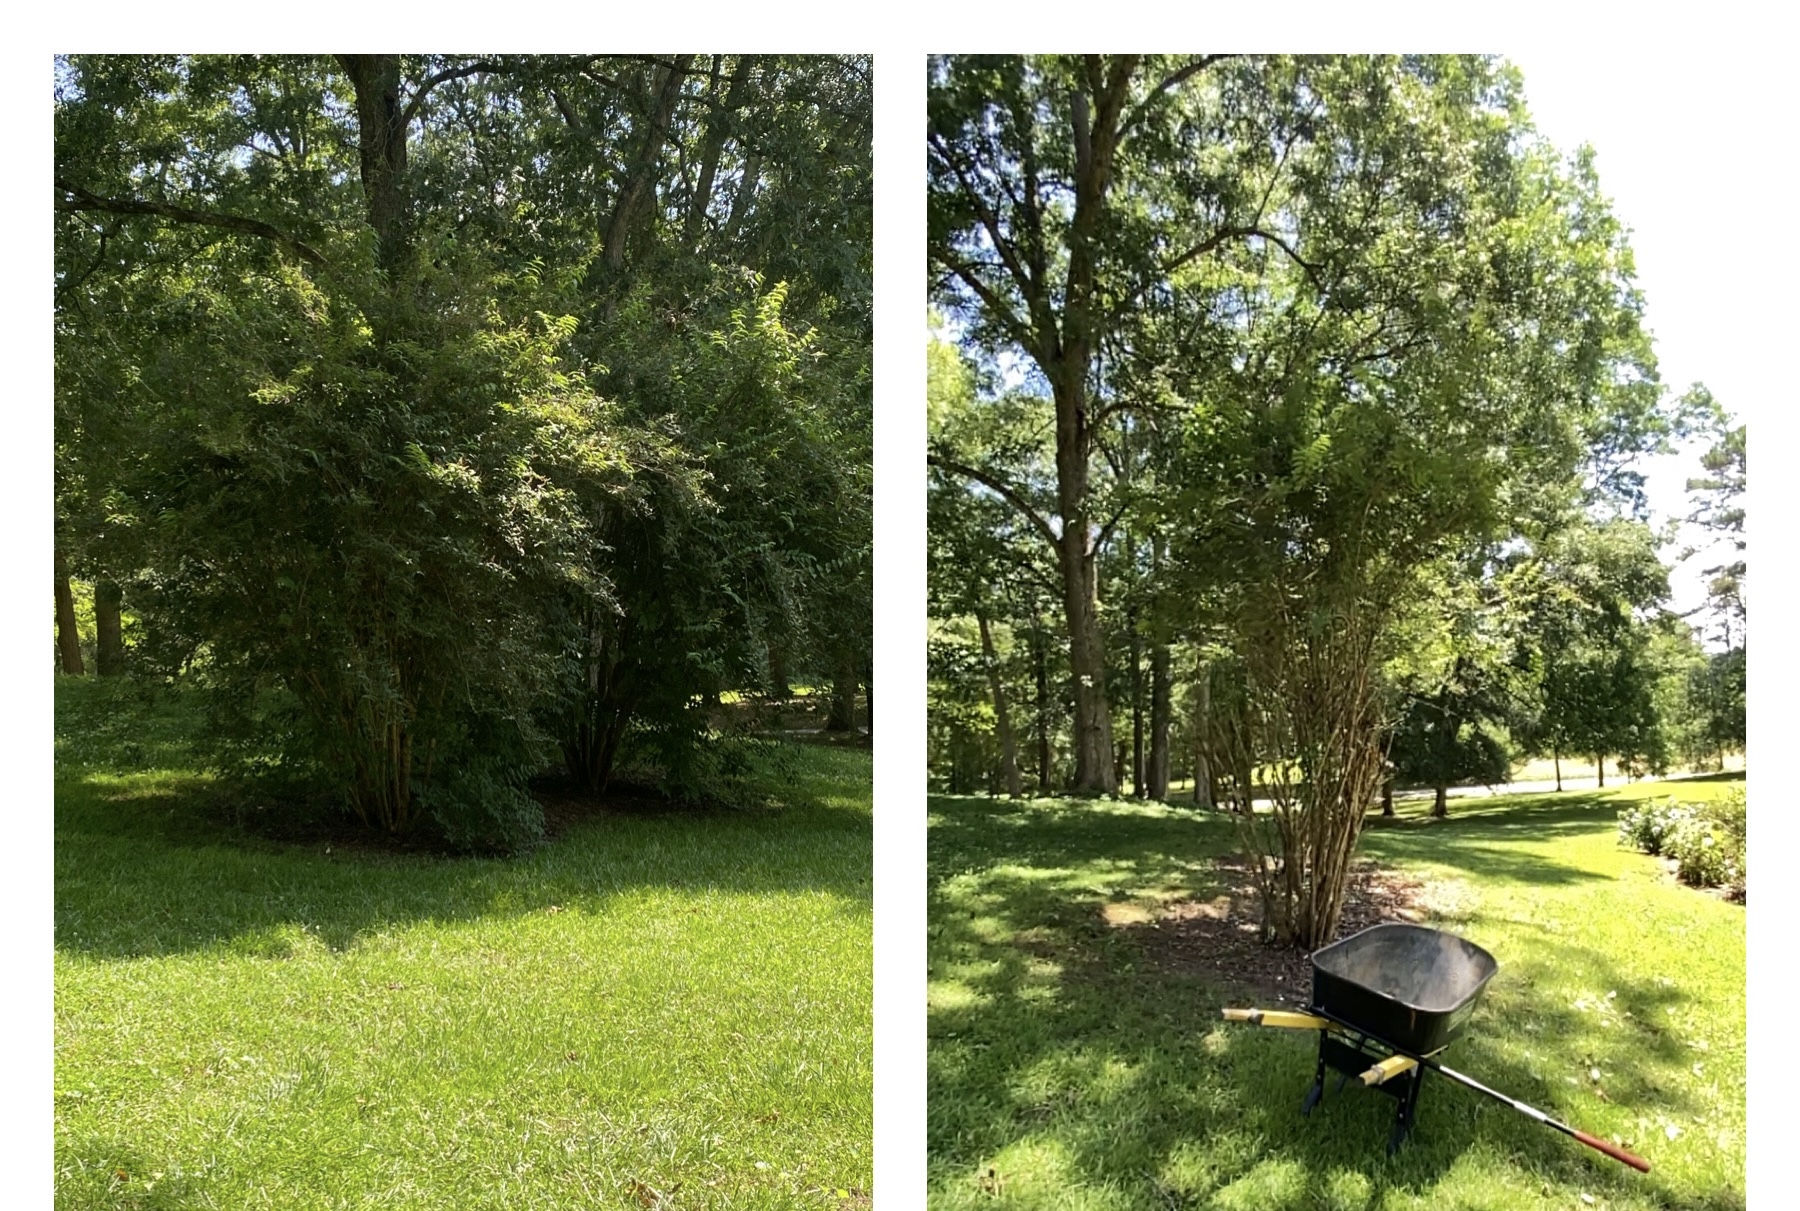 Pokey Gilberts Lawn care & Landscaping 40 Armory Rd, Ashland Alabama 36251